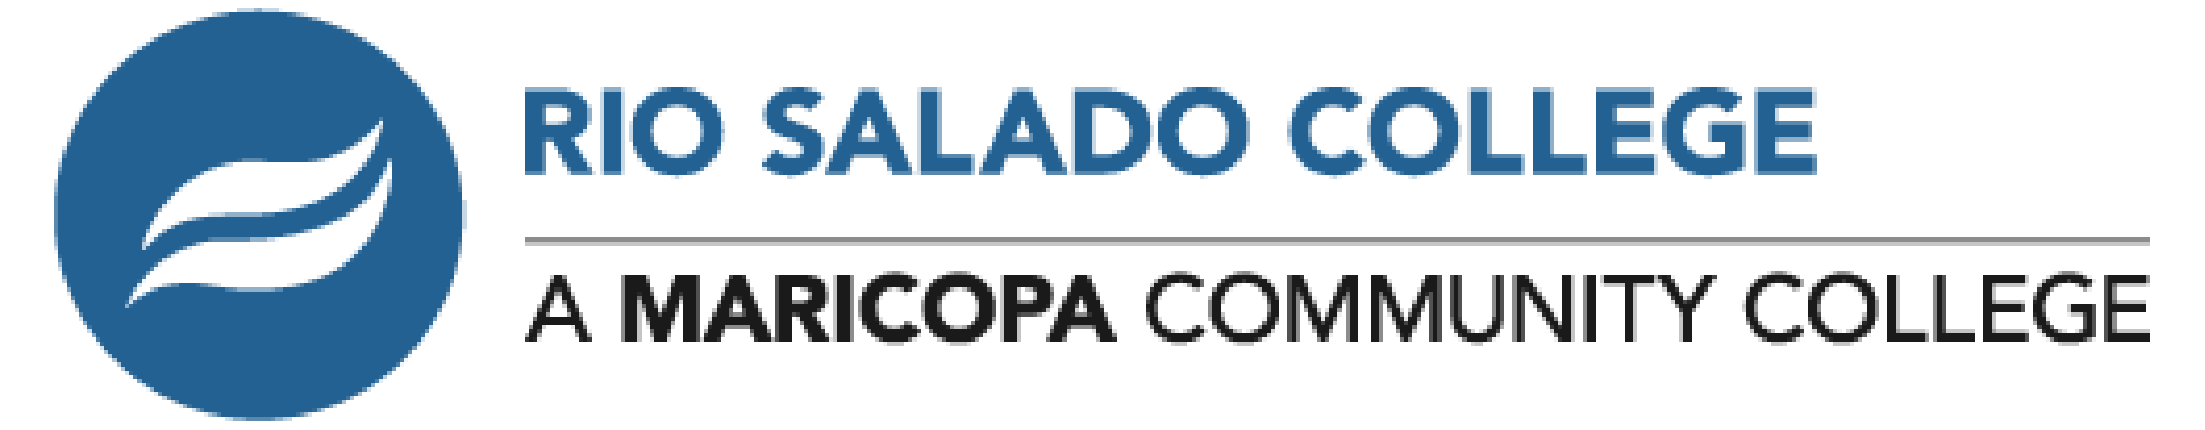 Rio Salado Community College Logo